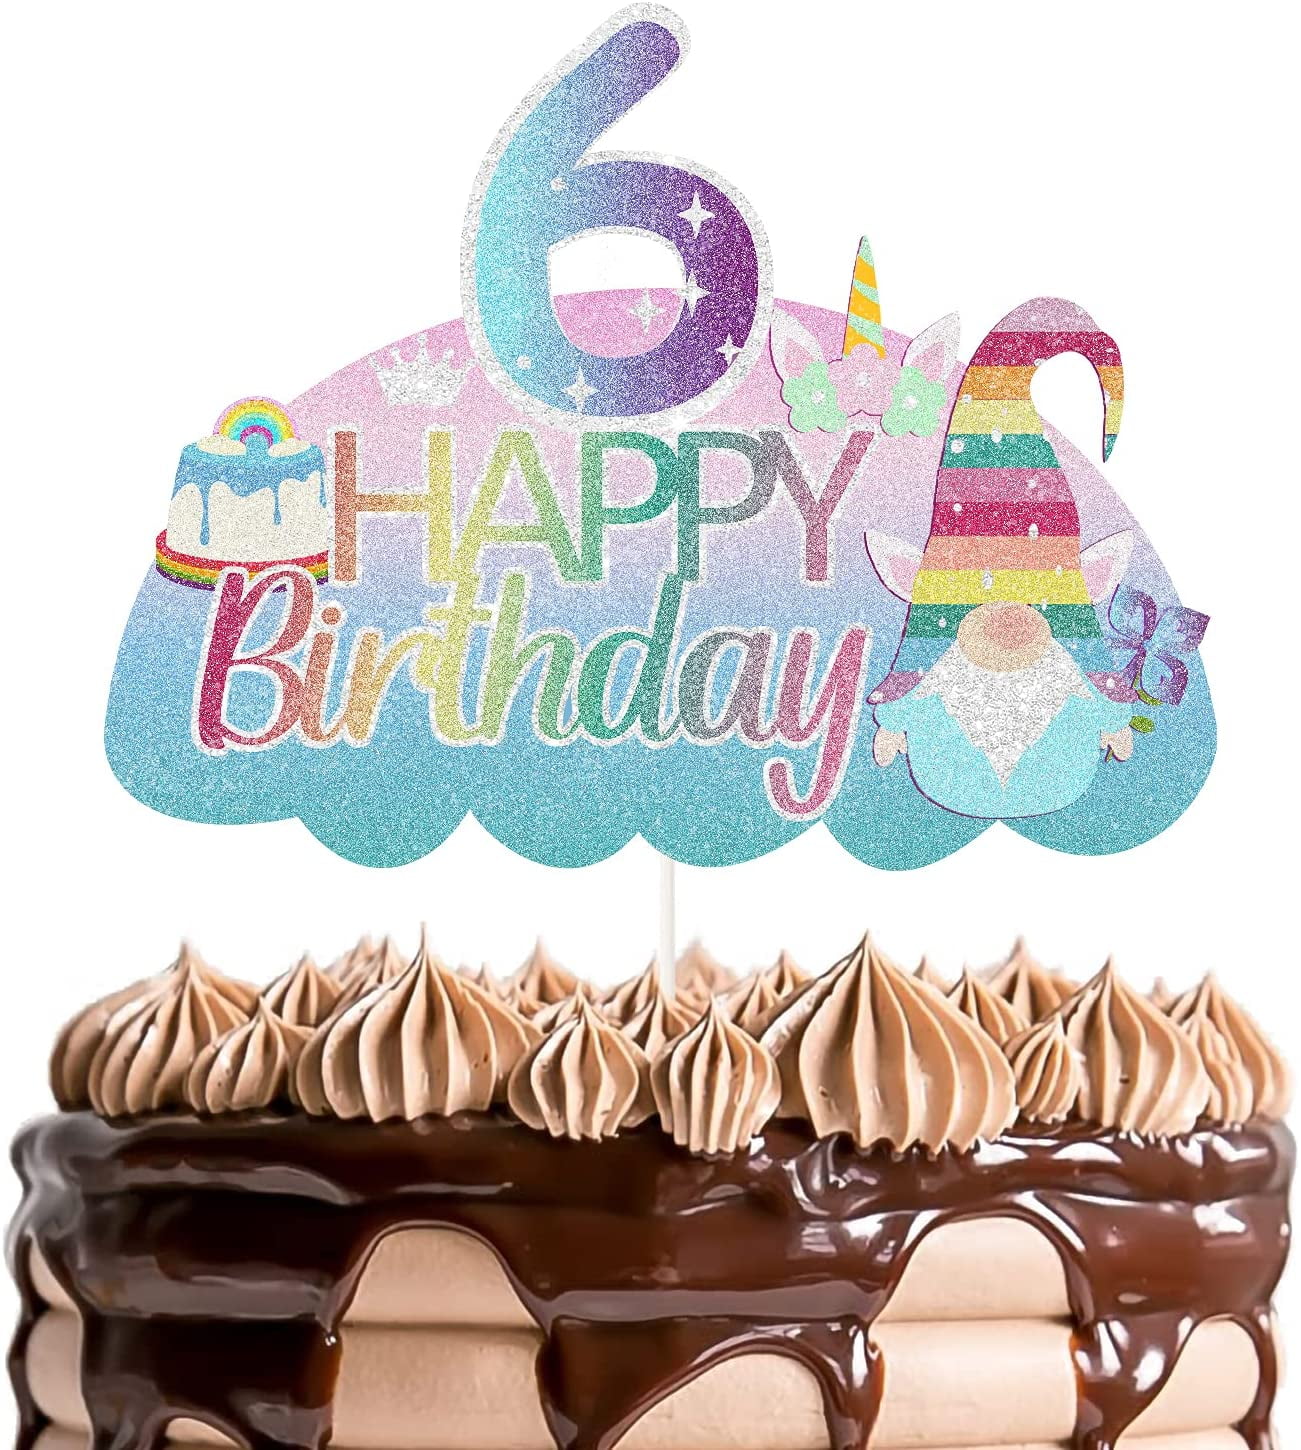 Happy Birthday Cake 6 Stock Illustration 543047722 | Shutterstock